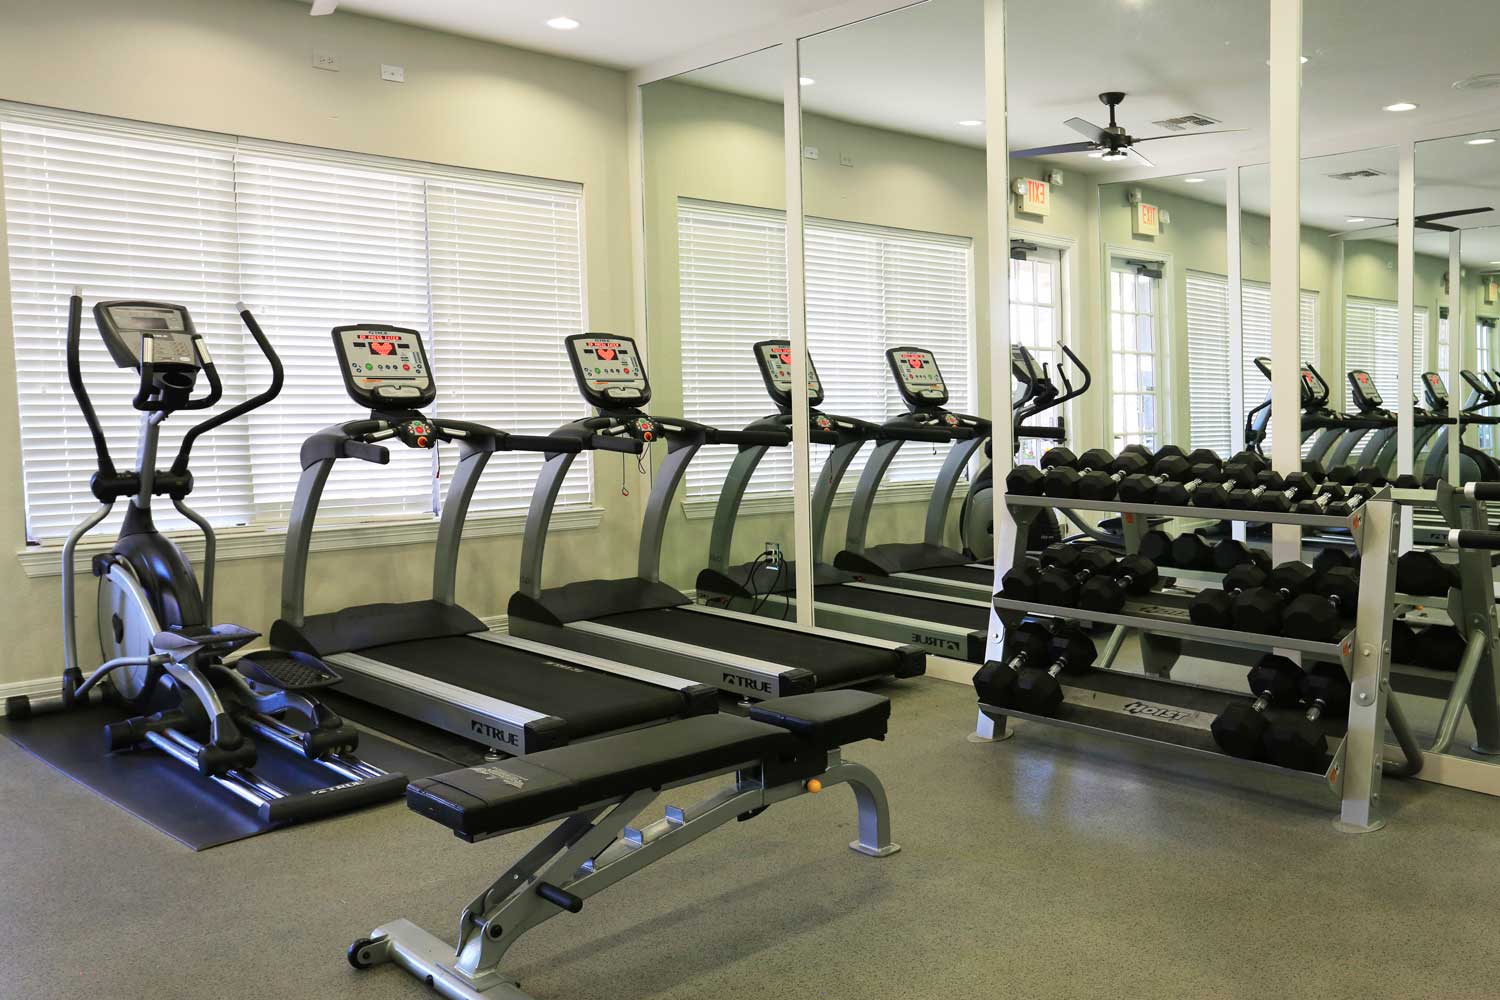 Cardio Equipments Available at Pinnacle Ridge Apartments in Dallas, Texas